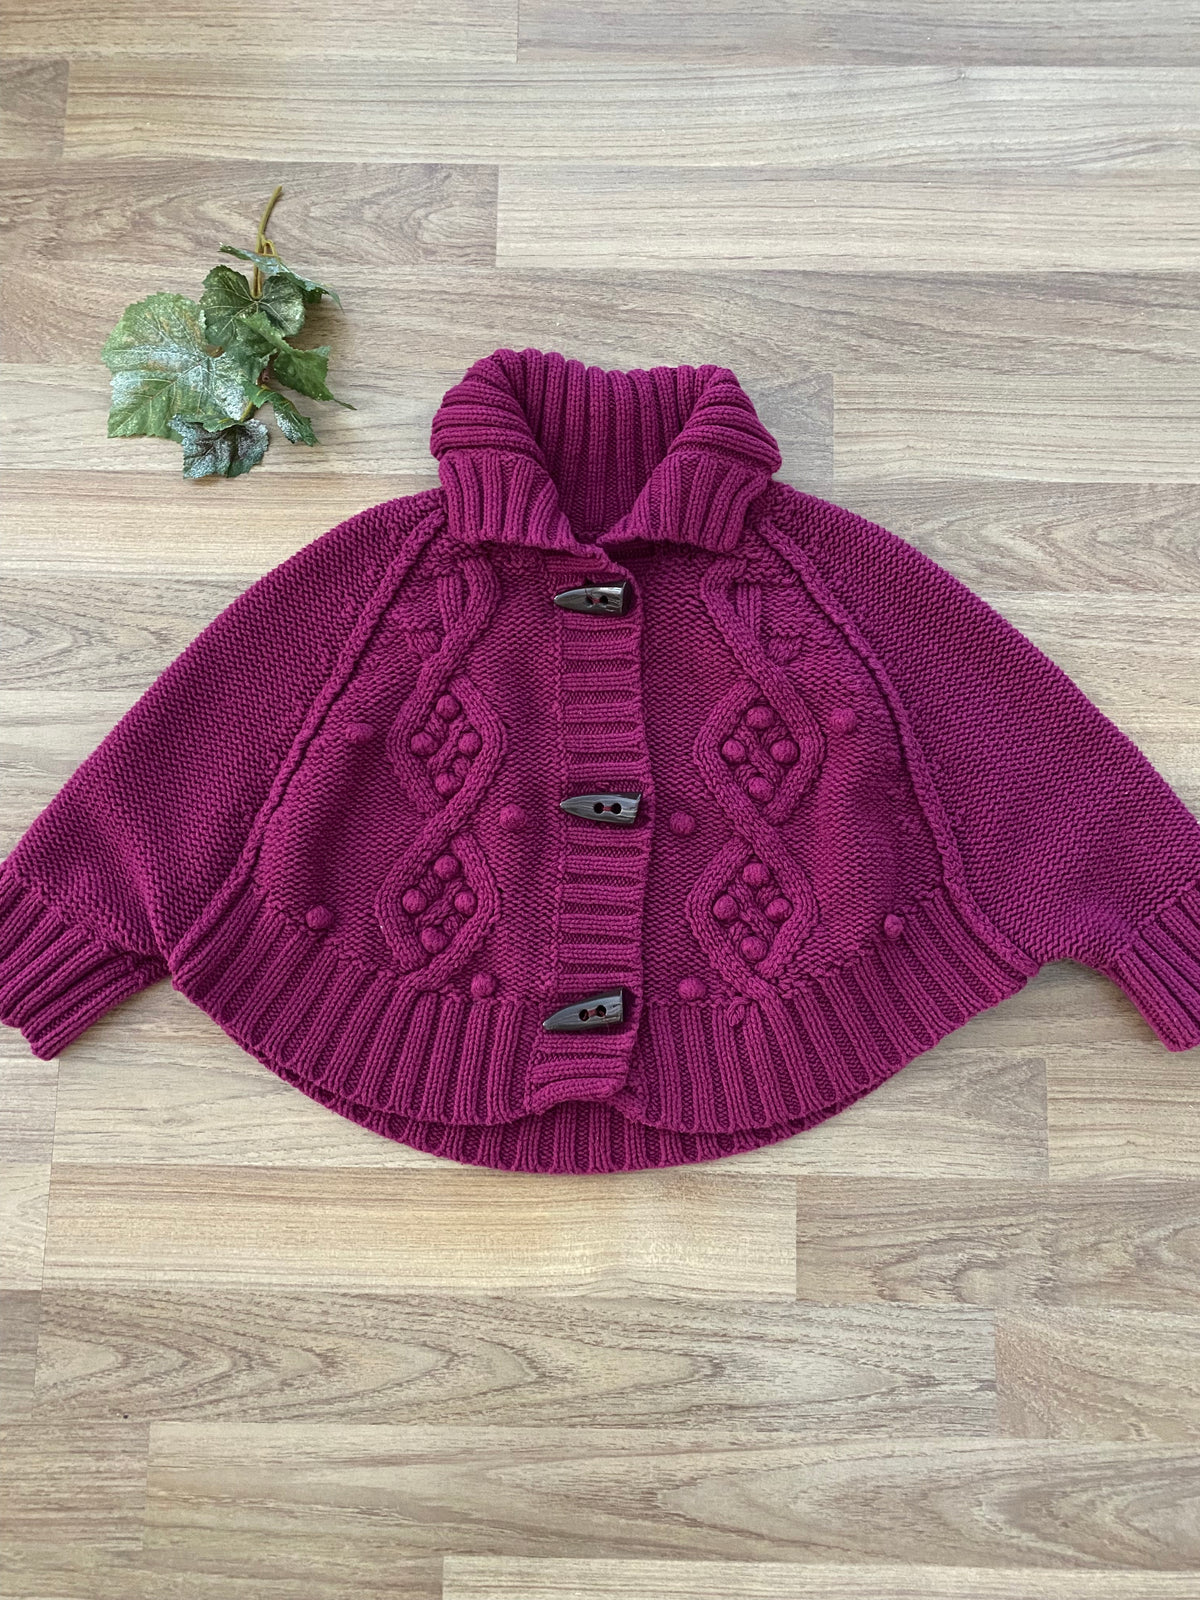 Poncho Sweater (Girls Size 3)